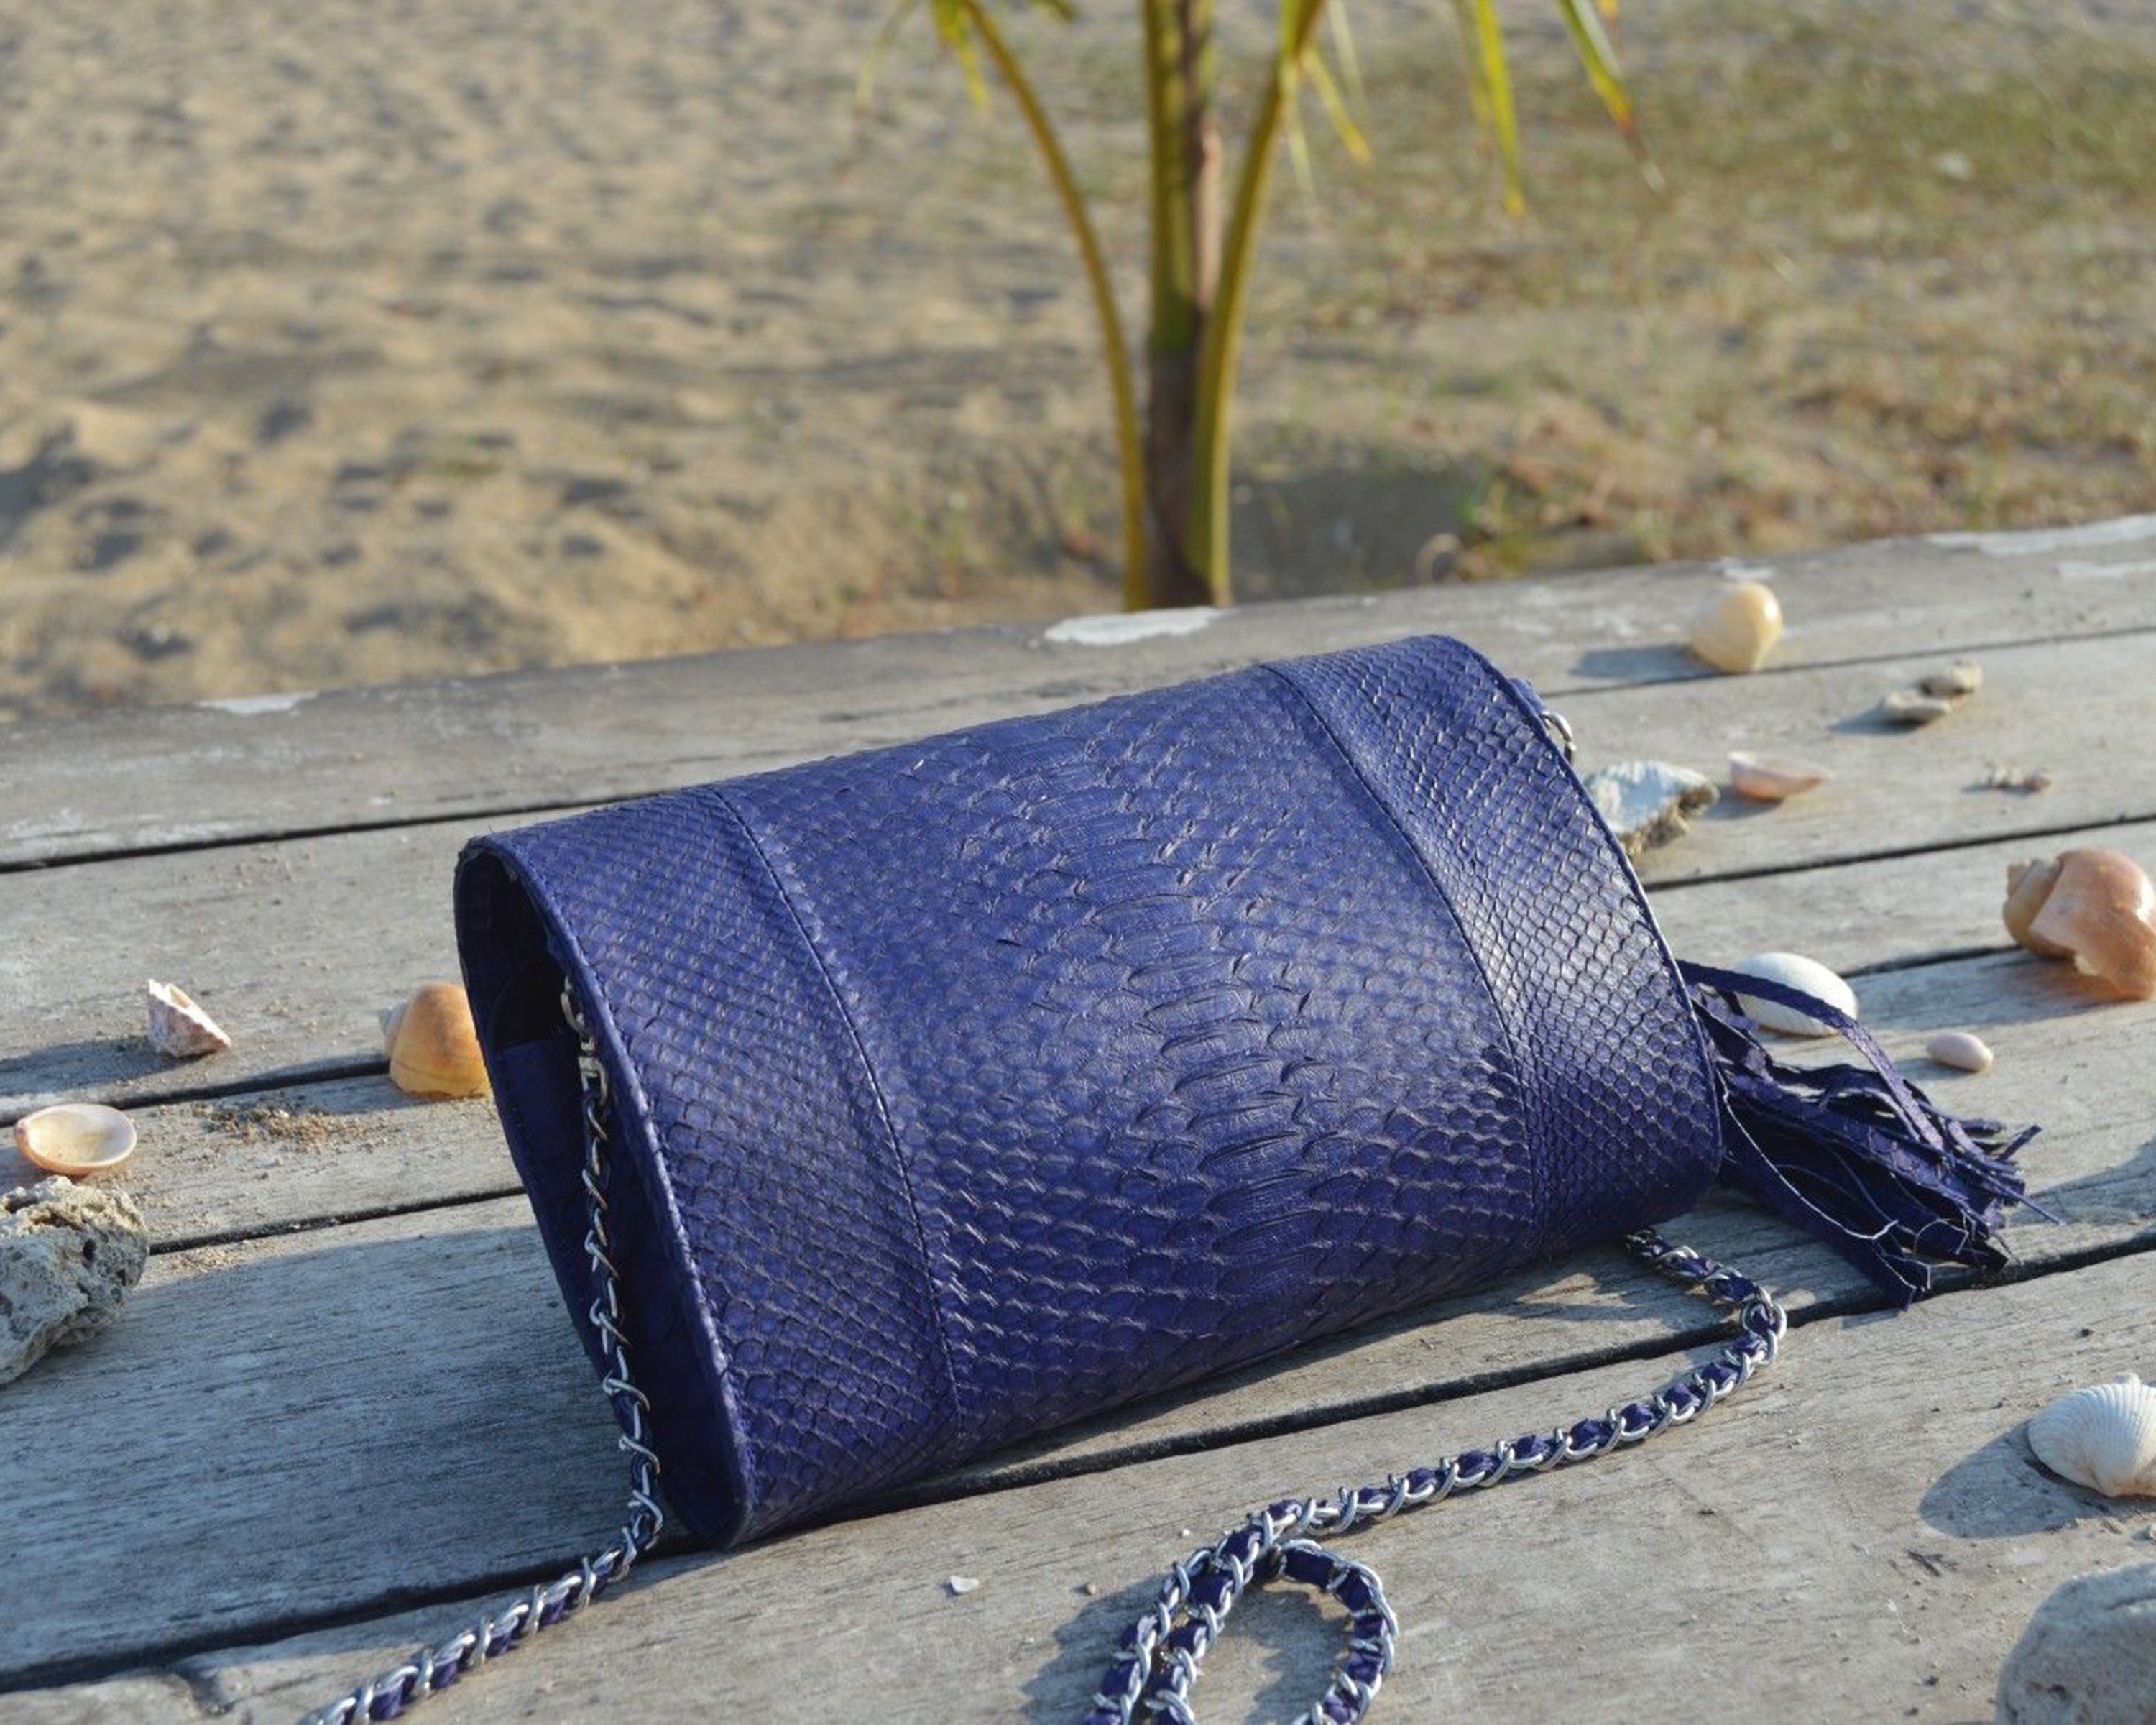  Real Python Snakeskin Purse Handbag Women Evening Clutch Bag  (Black/Brown/Blue/Natural) : Handmade Products